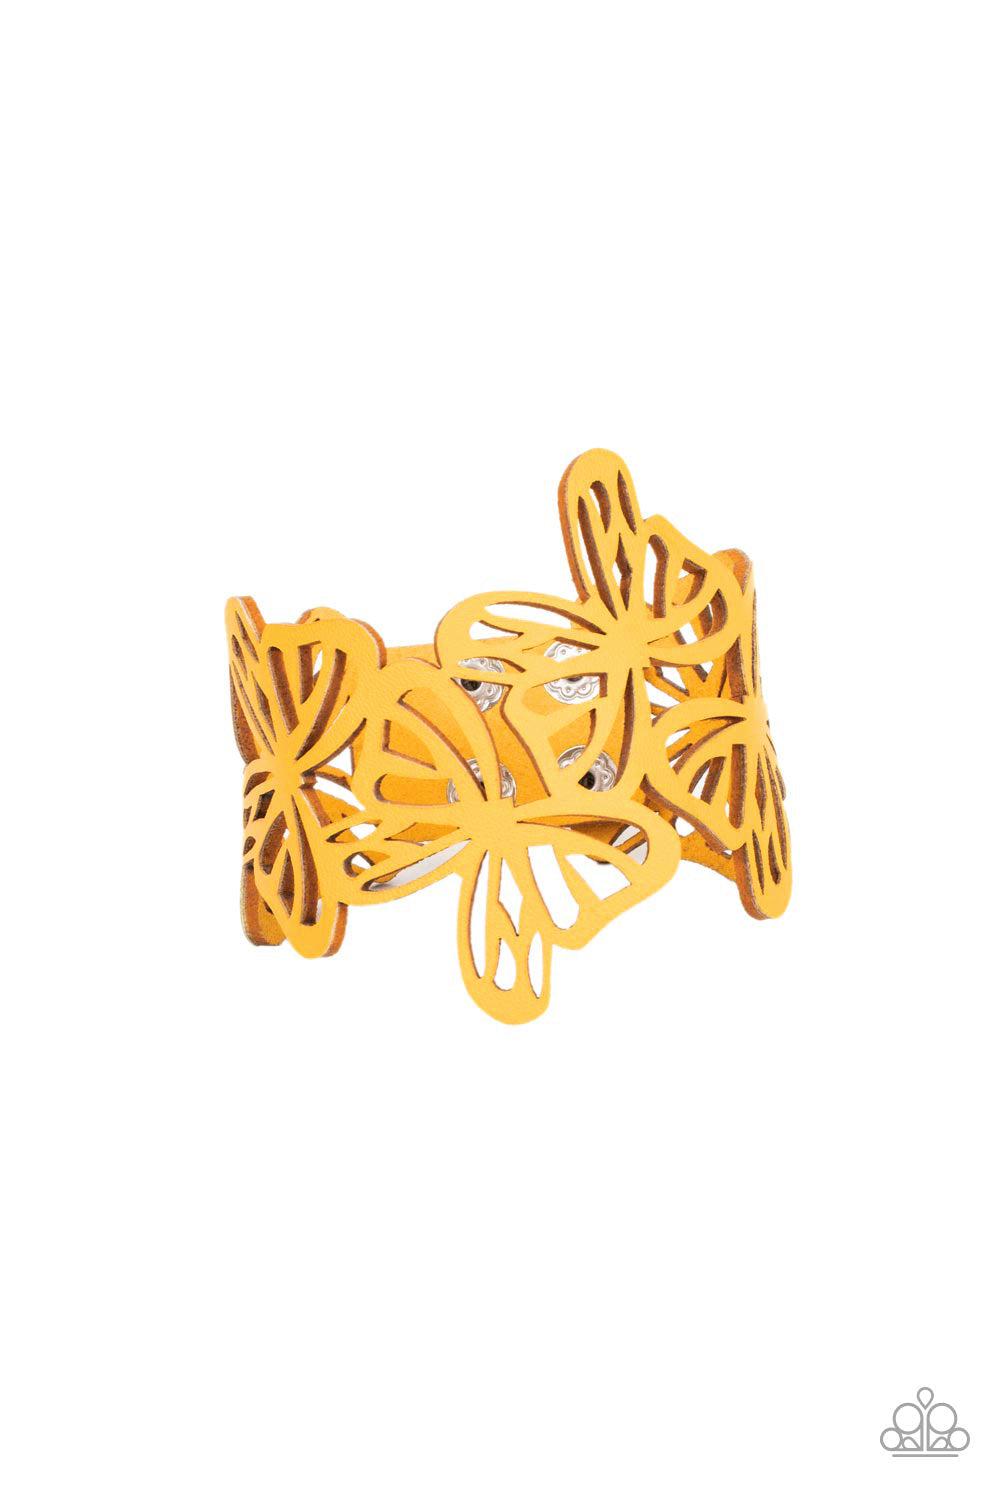 Butterfly Breeze Yellow Wrap Bracelet - Paparazzi Accessories- lightbox - CarasShop.com - $5 Jewelry by Cara Jewels